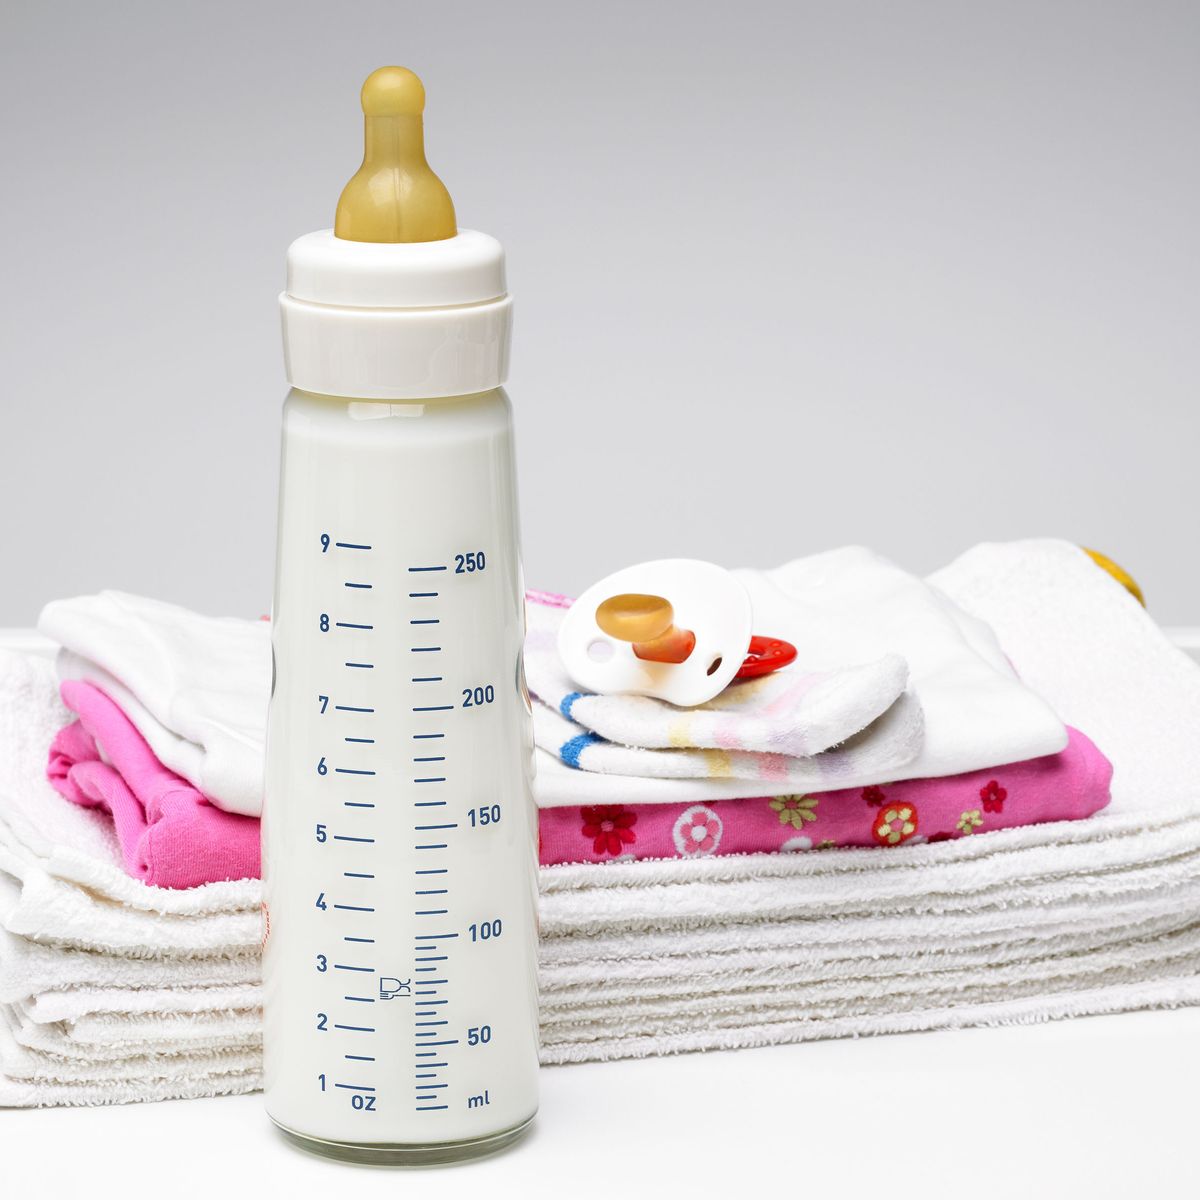 supplementing formula at night while breastfeeding